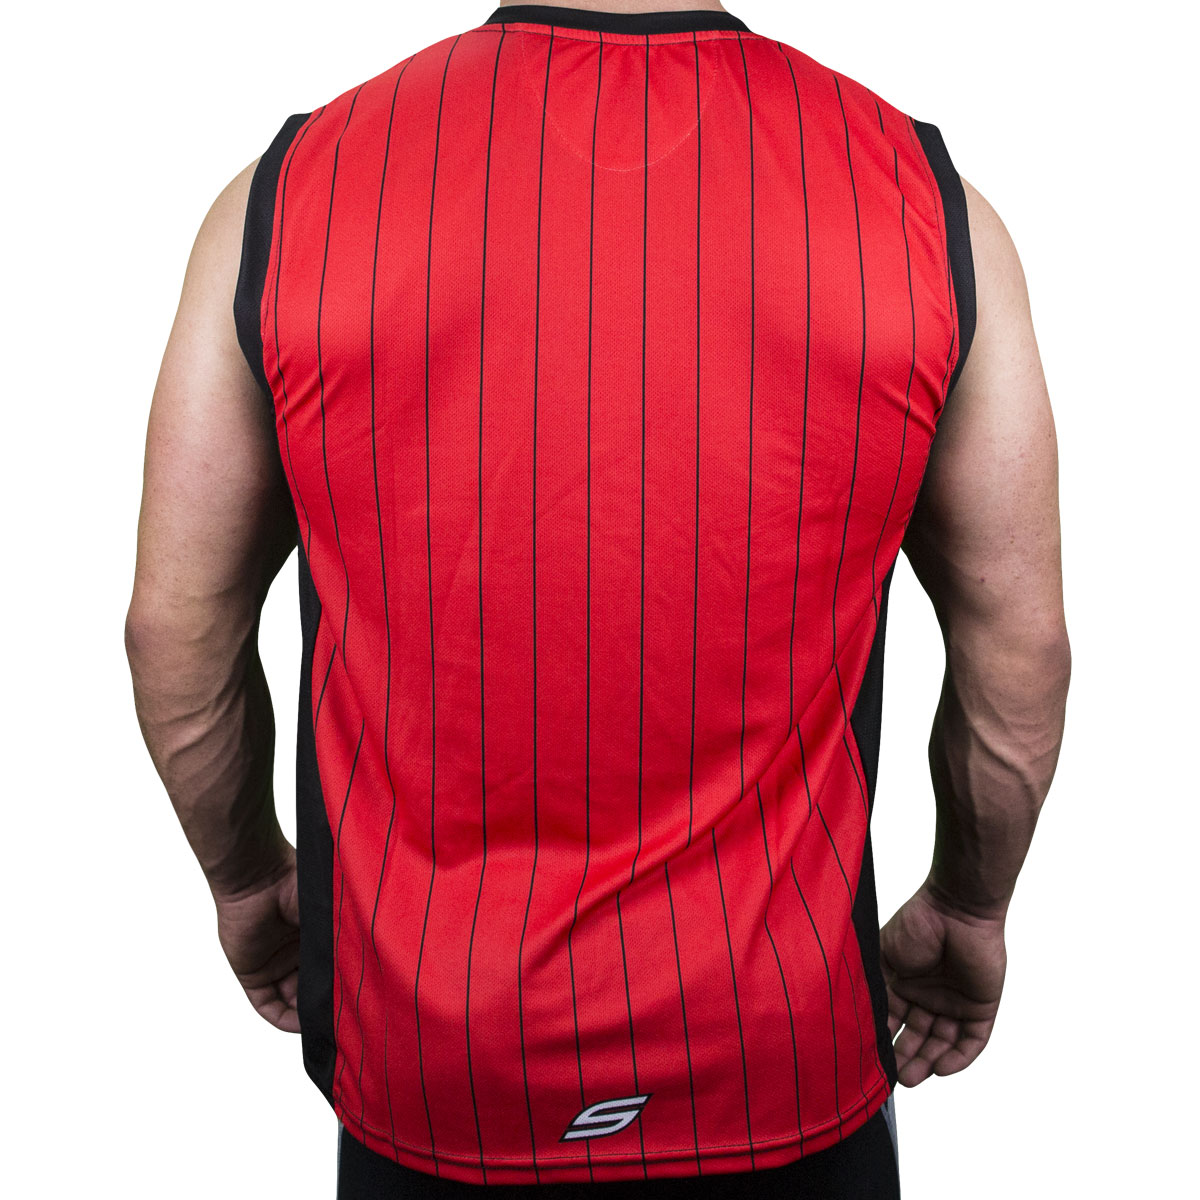 HealthdesignShops Men Sluggers Baseball Jersey - Pinstripe red black